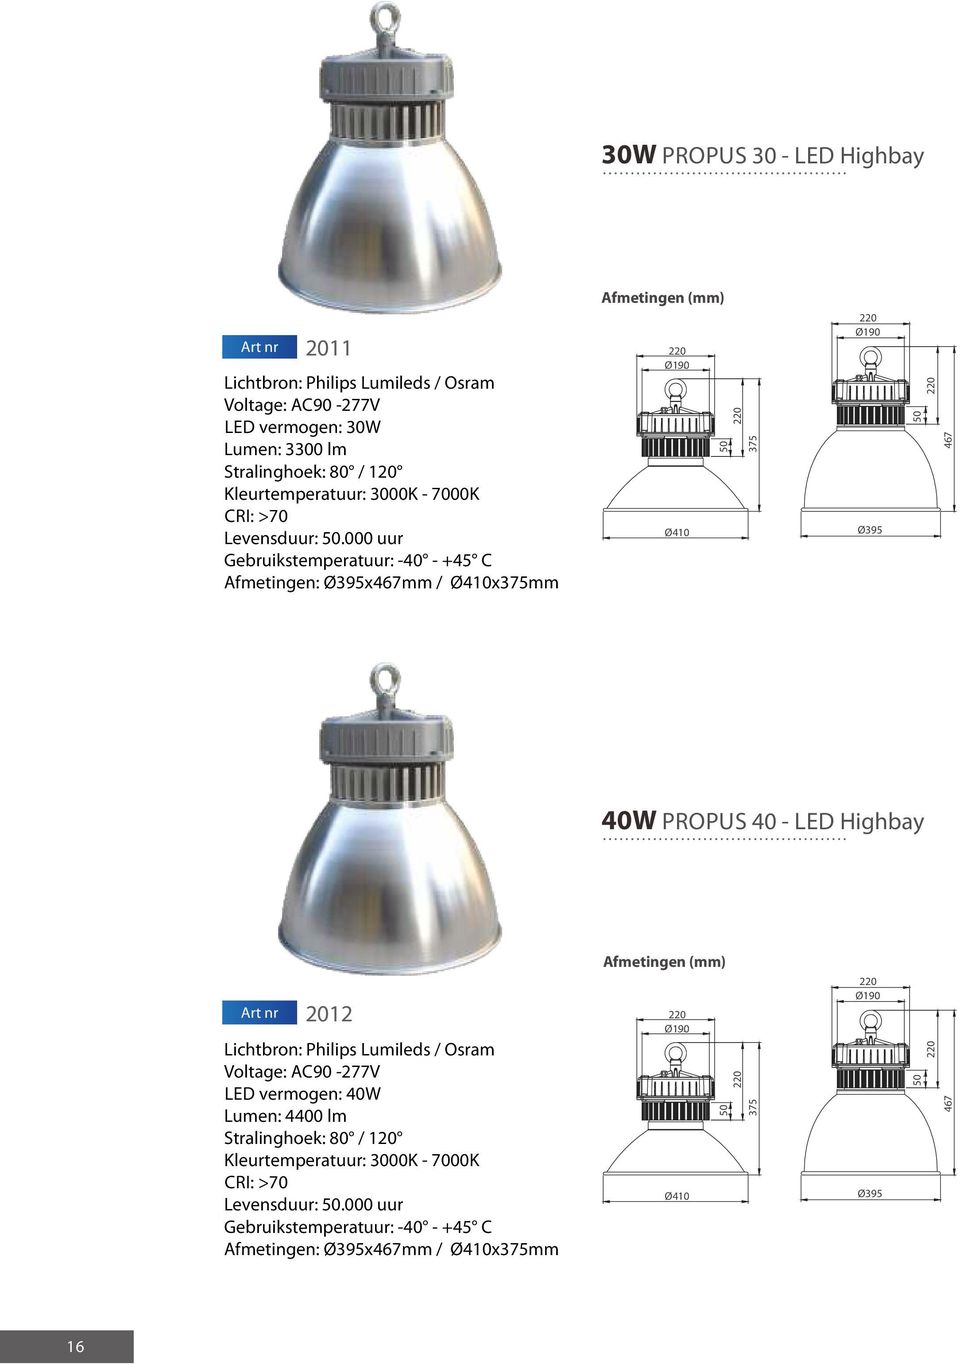 40W PROPUS 40 - LED Highbay Afmetingen (mm) 2012 Lichtbron: Philips Lumileds / Osram Voltage: AC90-277V LED vermogen: 40W Lumen: 4400 lm Stralinghoek: 80 / 120 